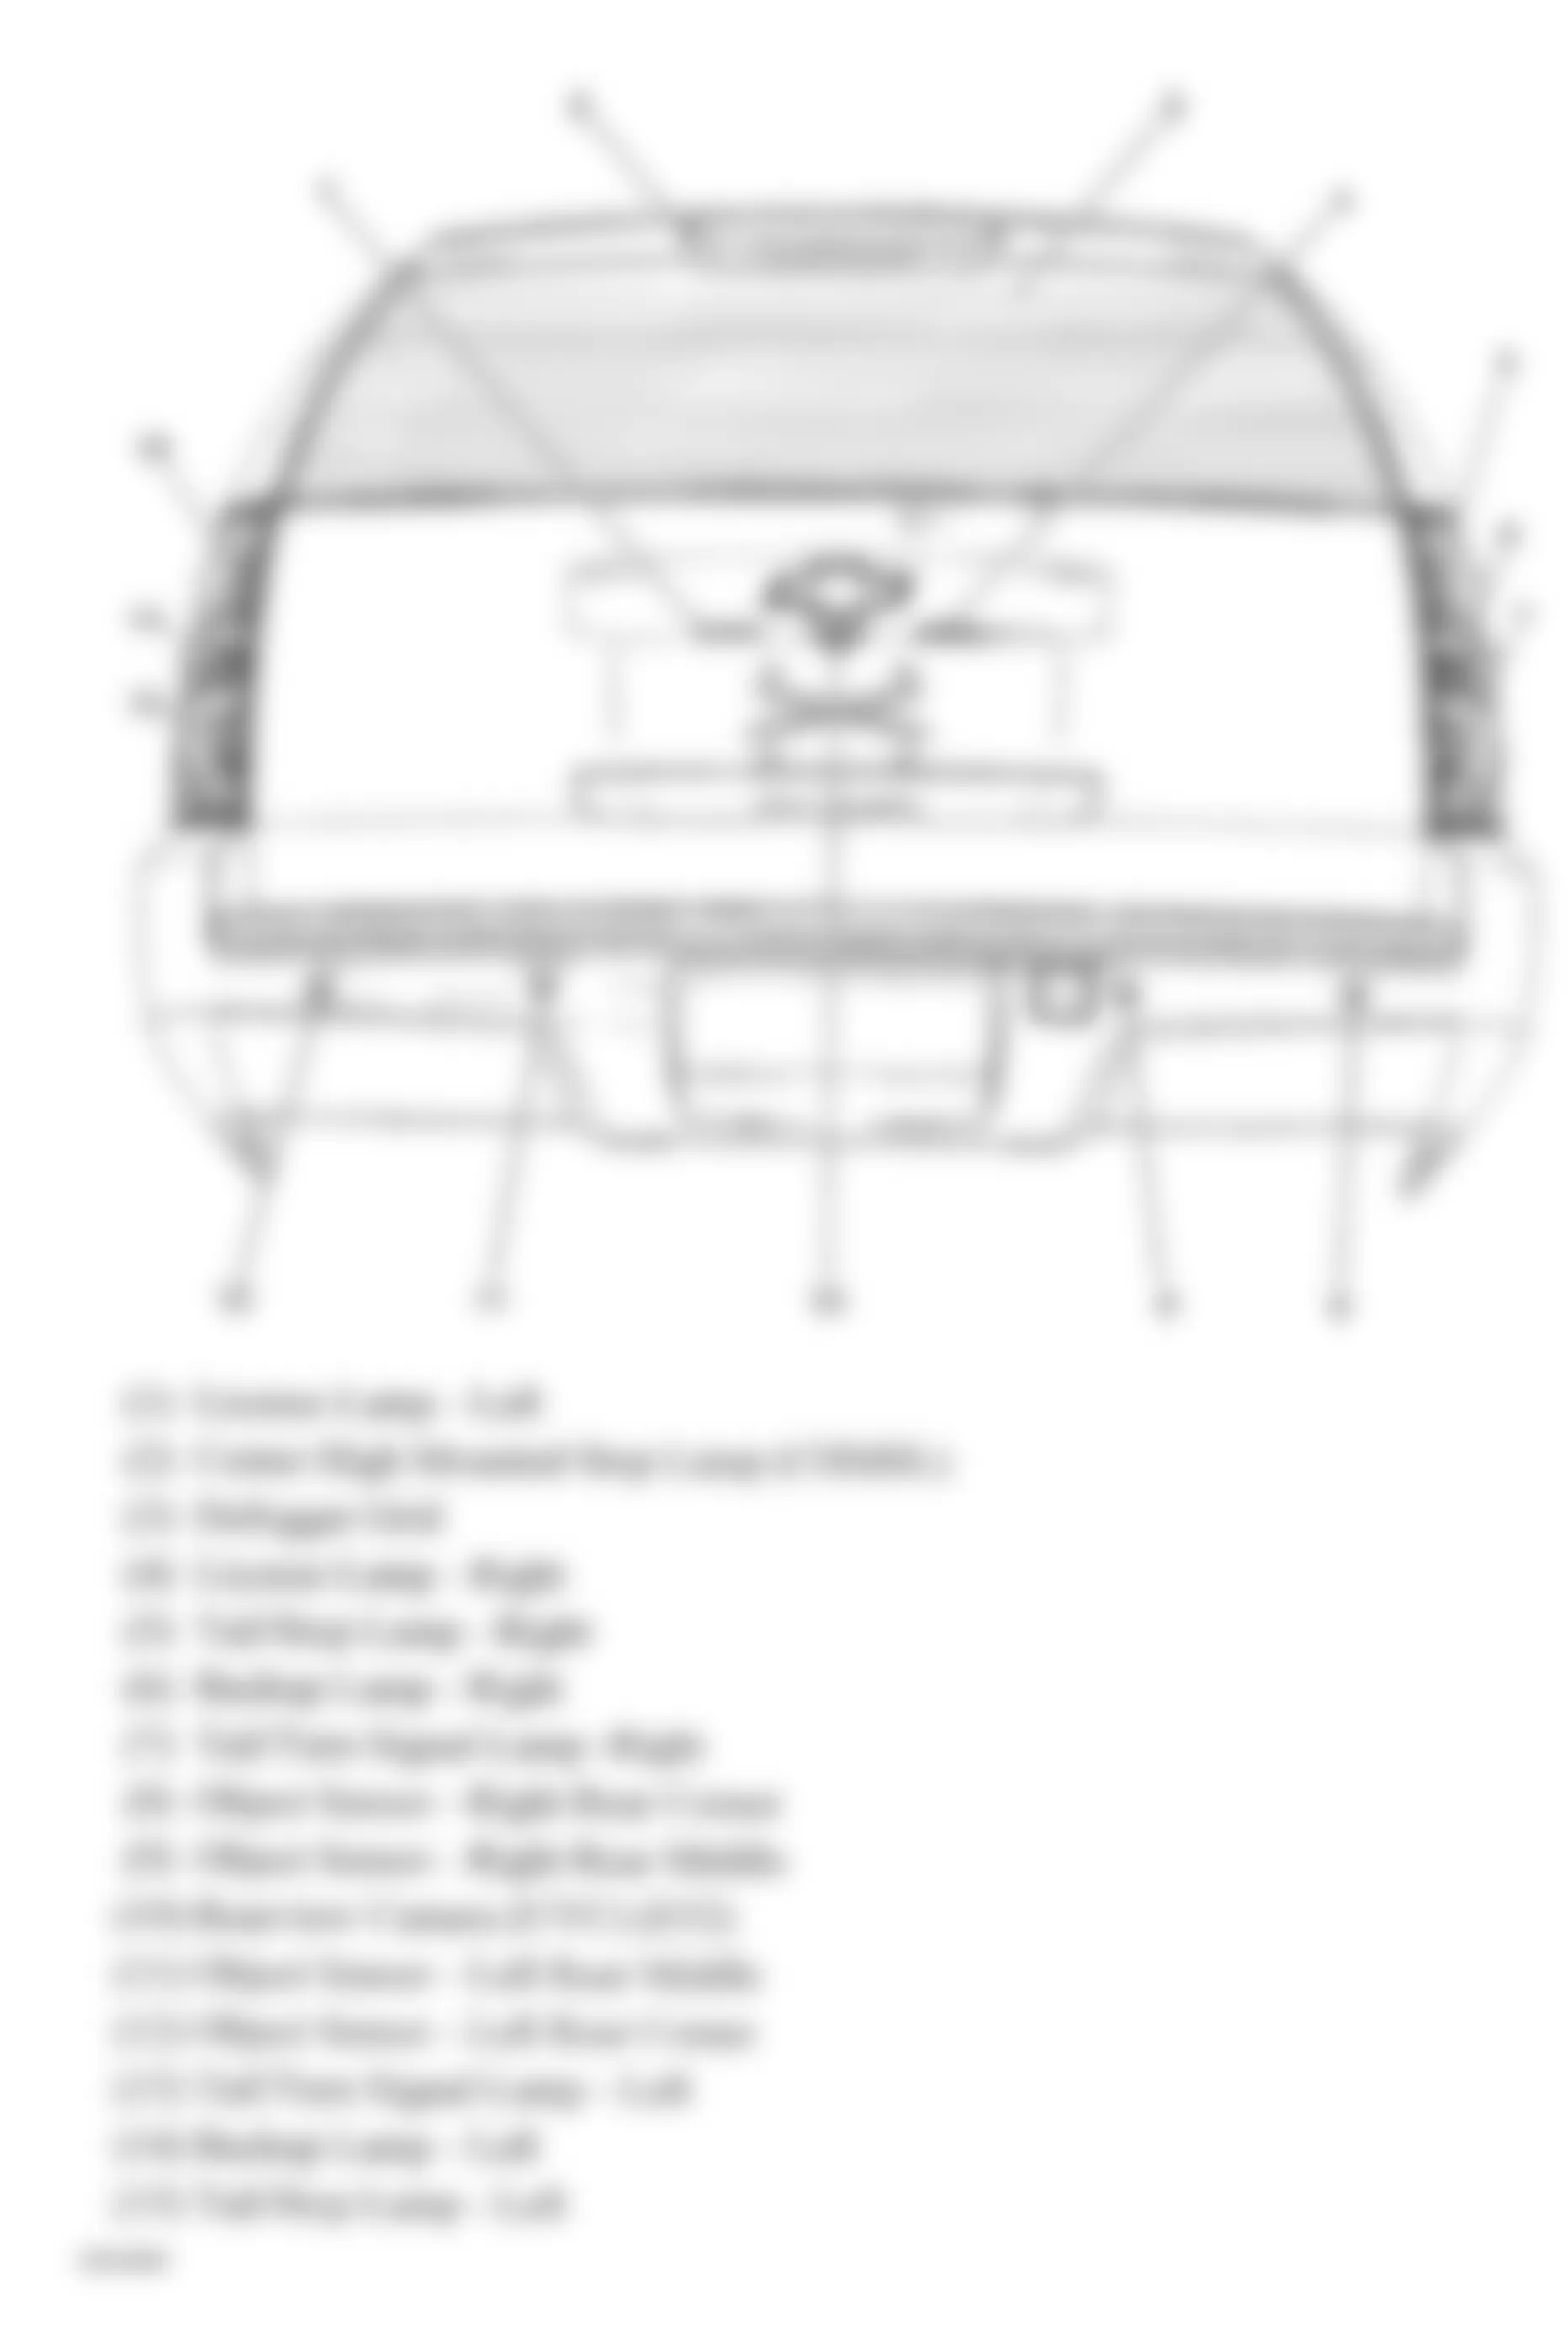 GMC Yukon Denali 2007 - Component Locations -  Rear Of Vehicle (Avalanche, Suburban & Tahoe W/One Piece Liftgate)